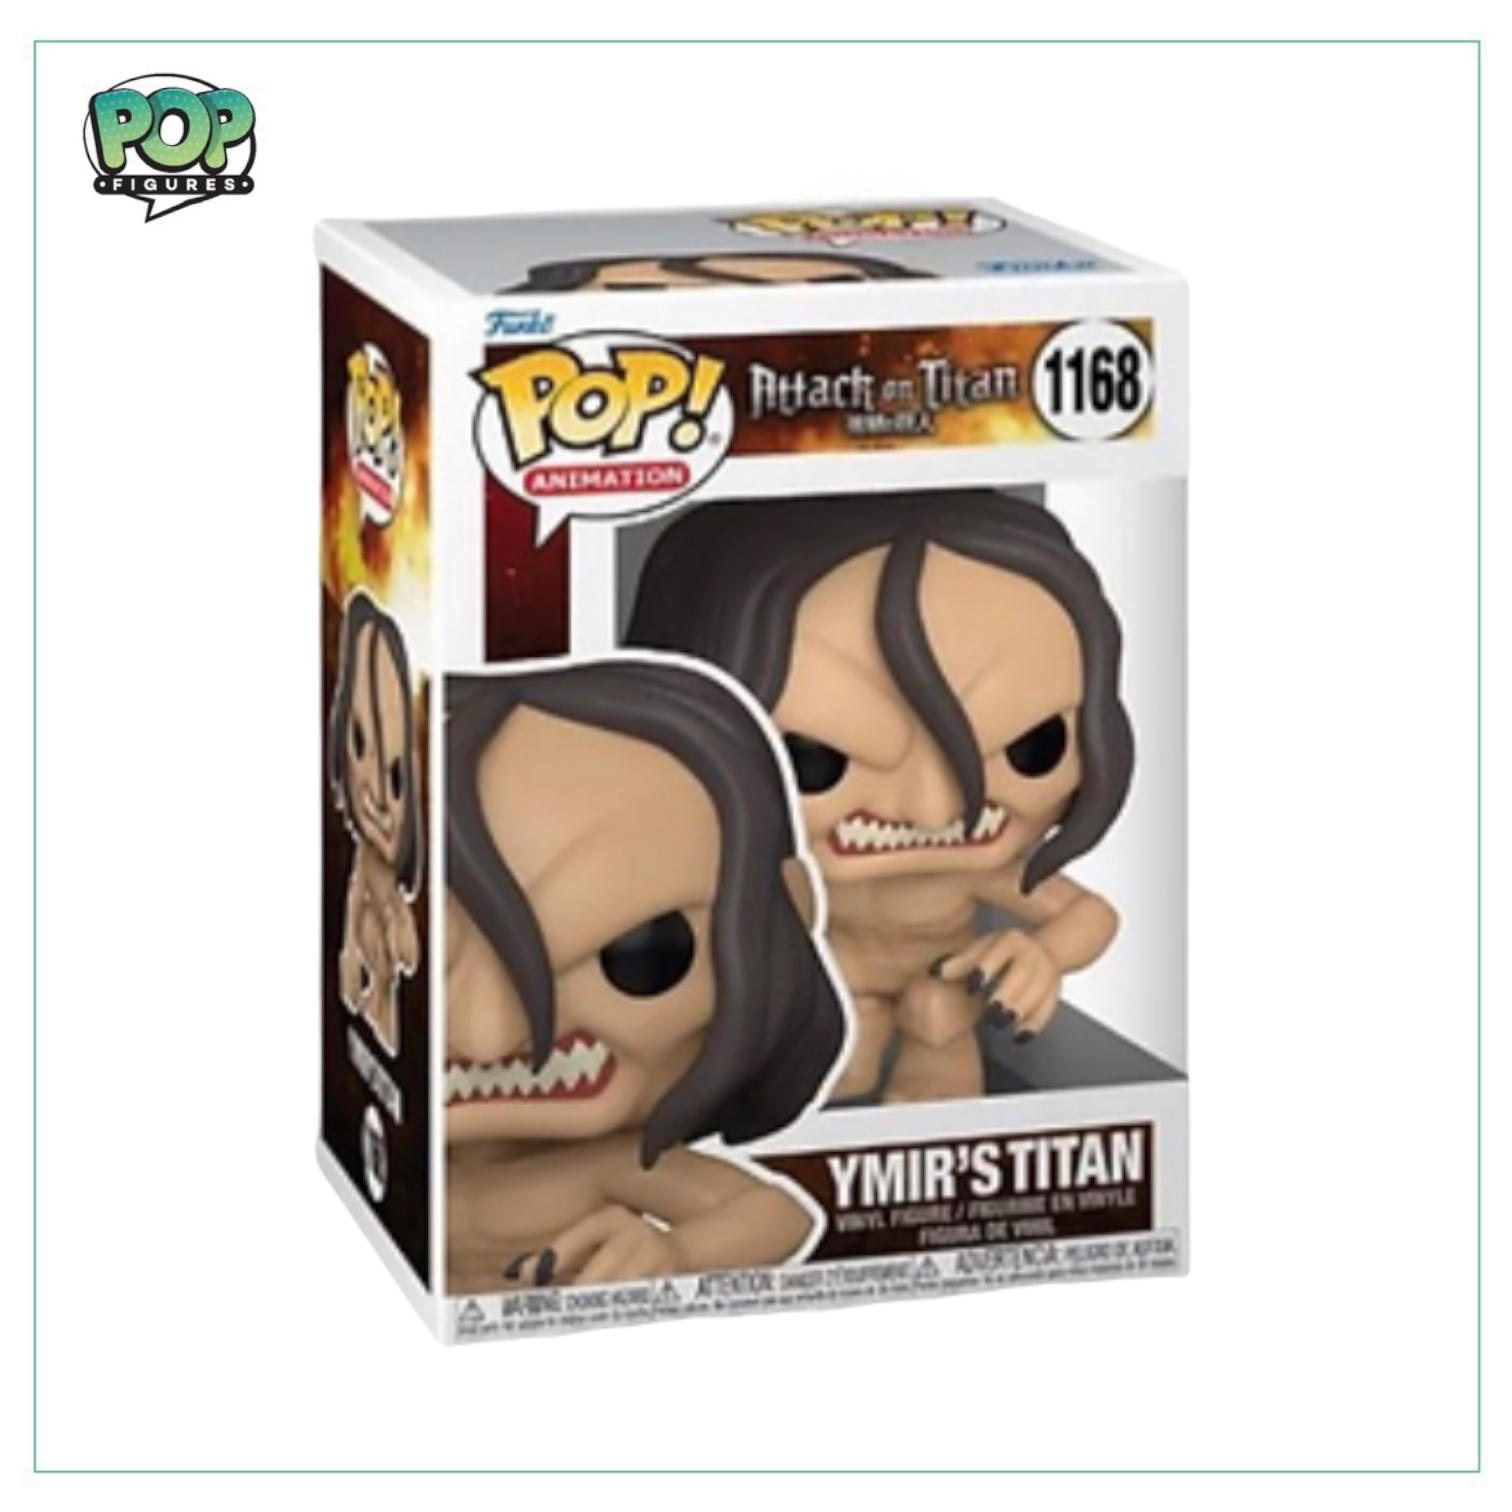 Ymir's Titan #1168 Funko Pop! - Attack on Titan